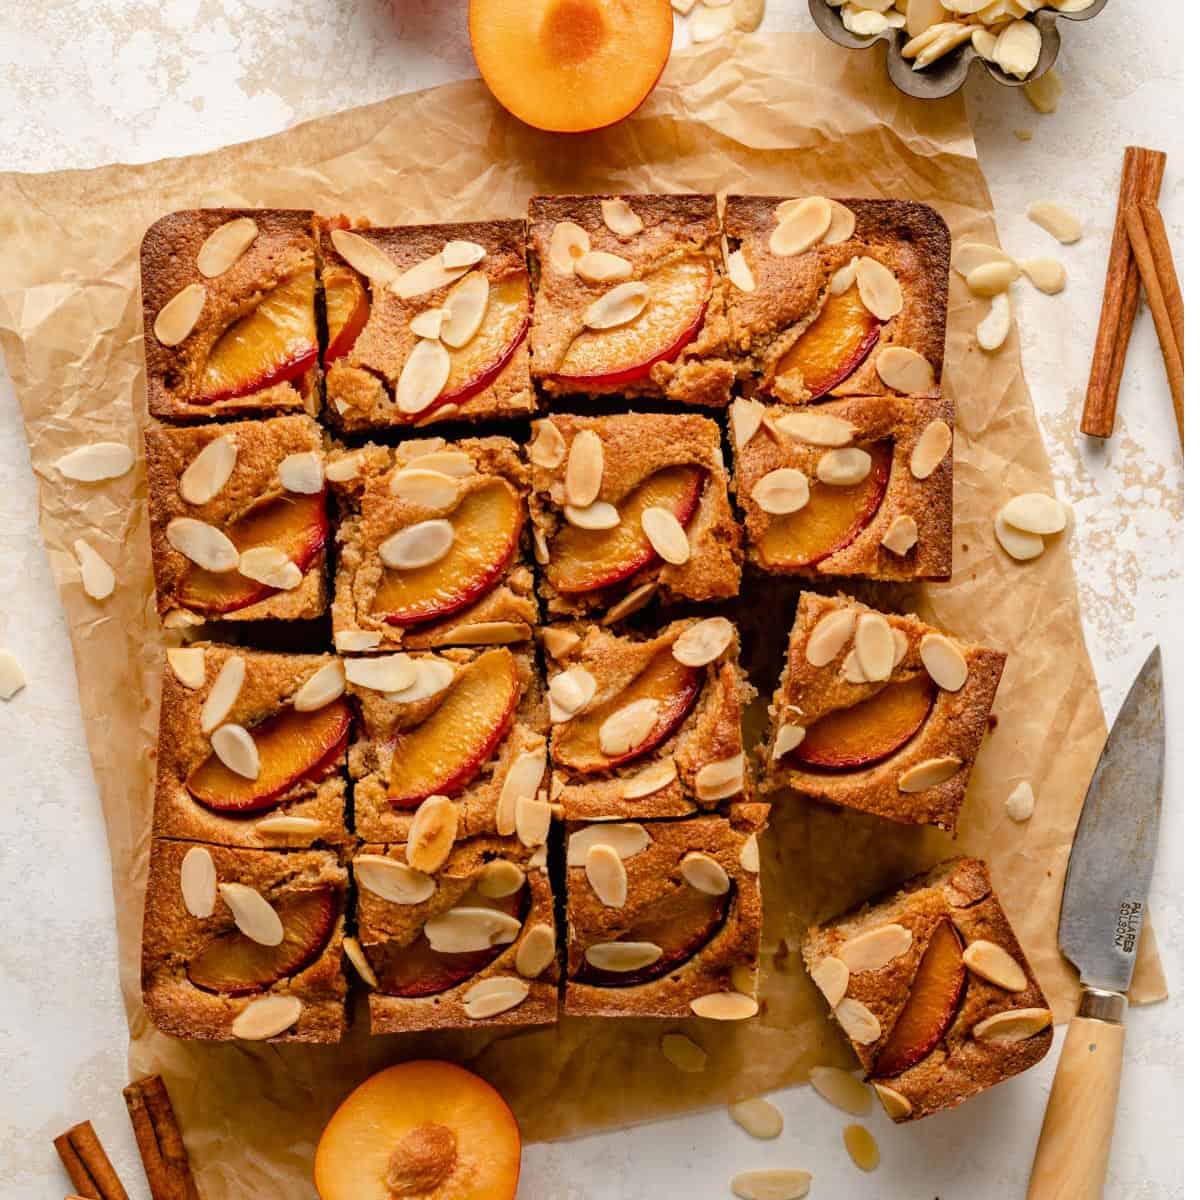 https://www.eatloveeats.com/wp-content/uploads/2021/09/Plum-and-Almond-Cake-Featured-Image.jpg